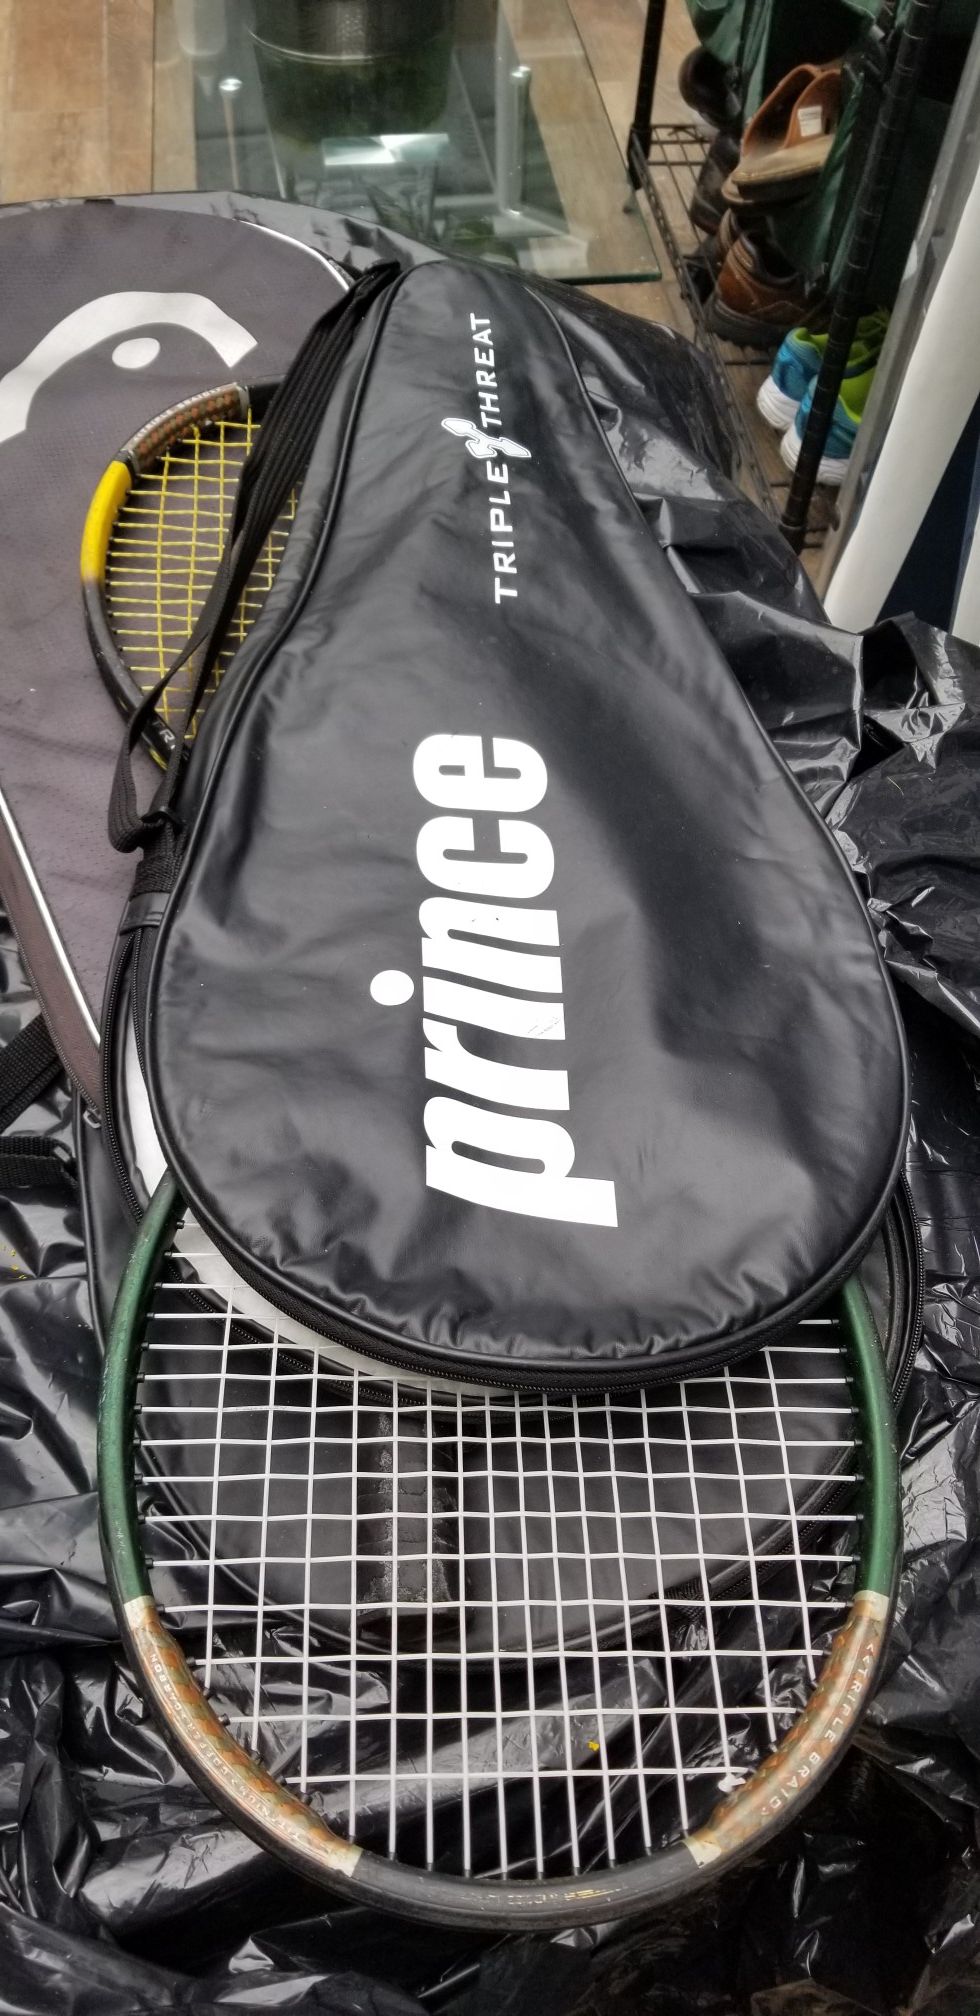 Prince tennis rackets